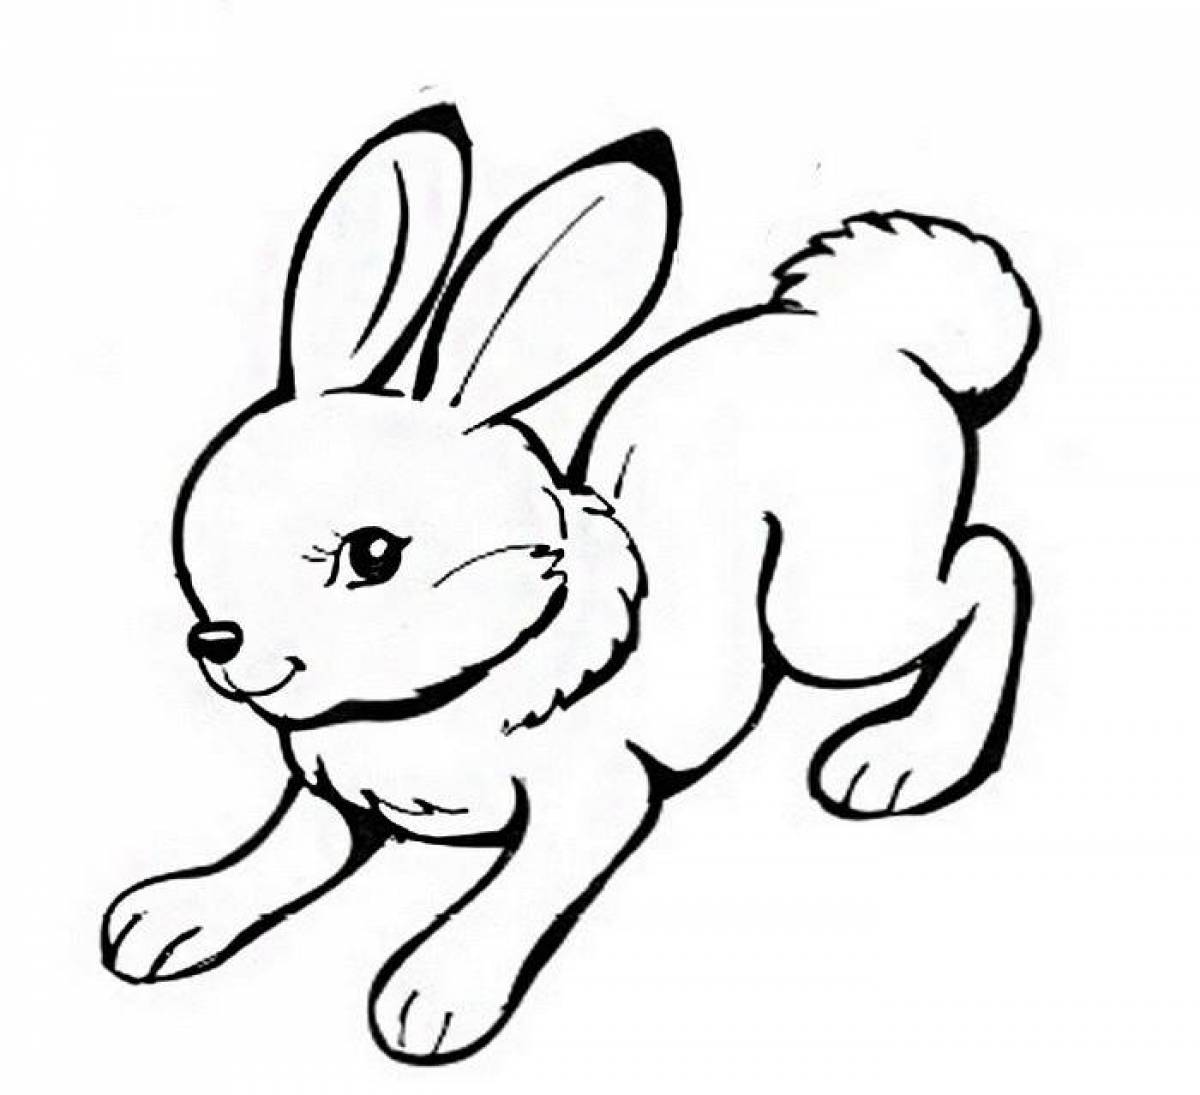 Fantastic coloring hare image